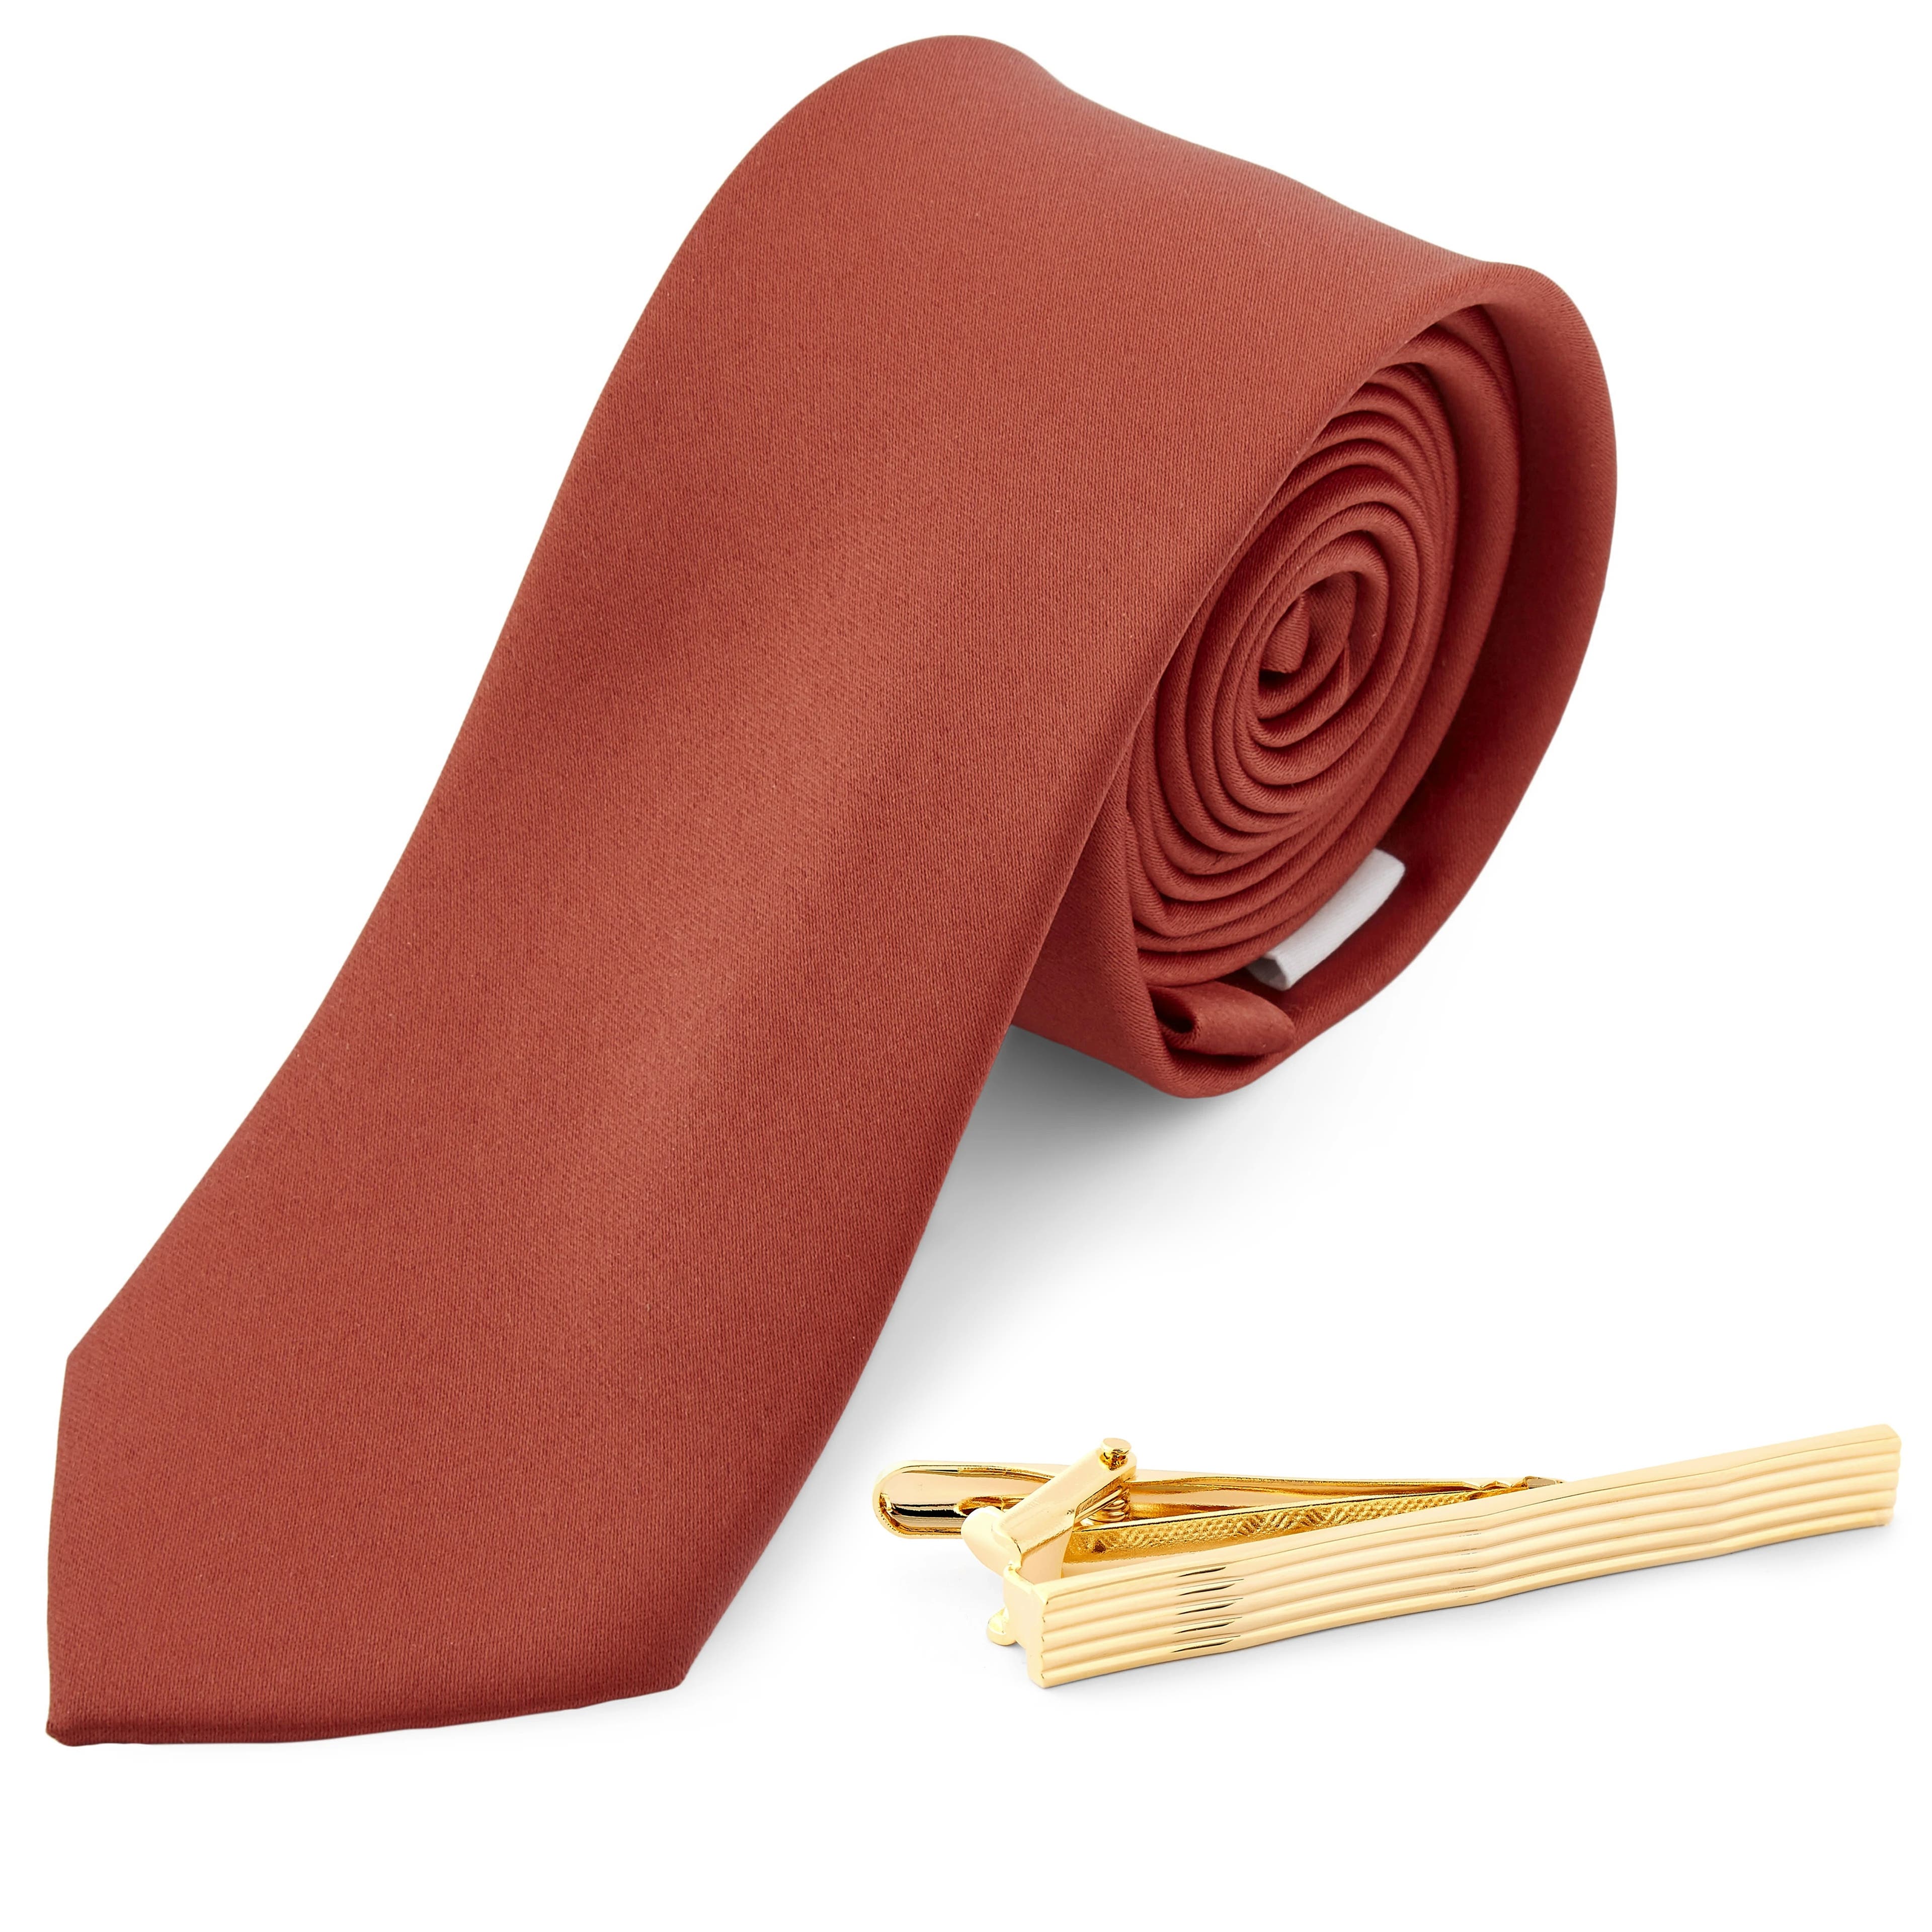 Sada terakotové kravaty a kravatové spony zlaté barvy